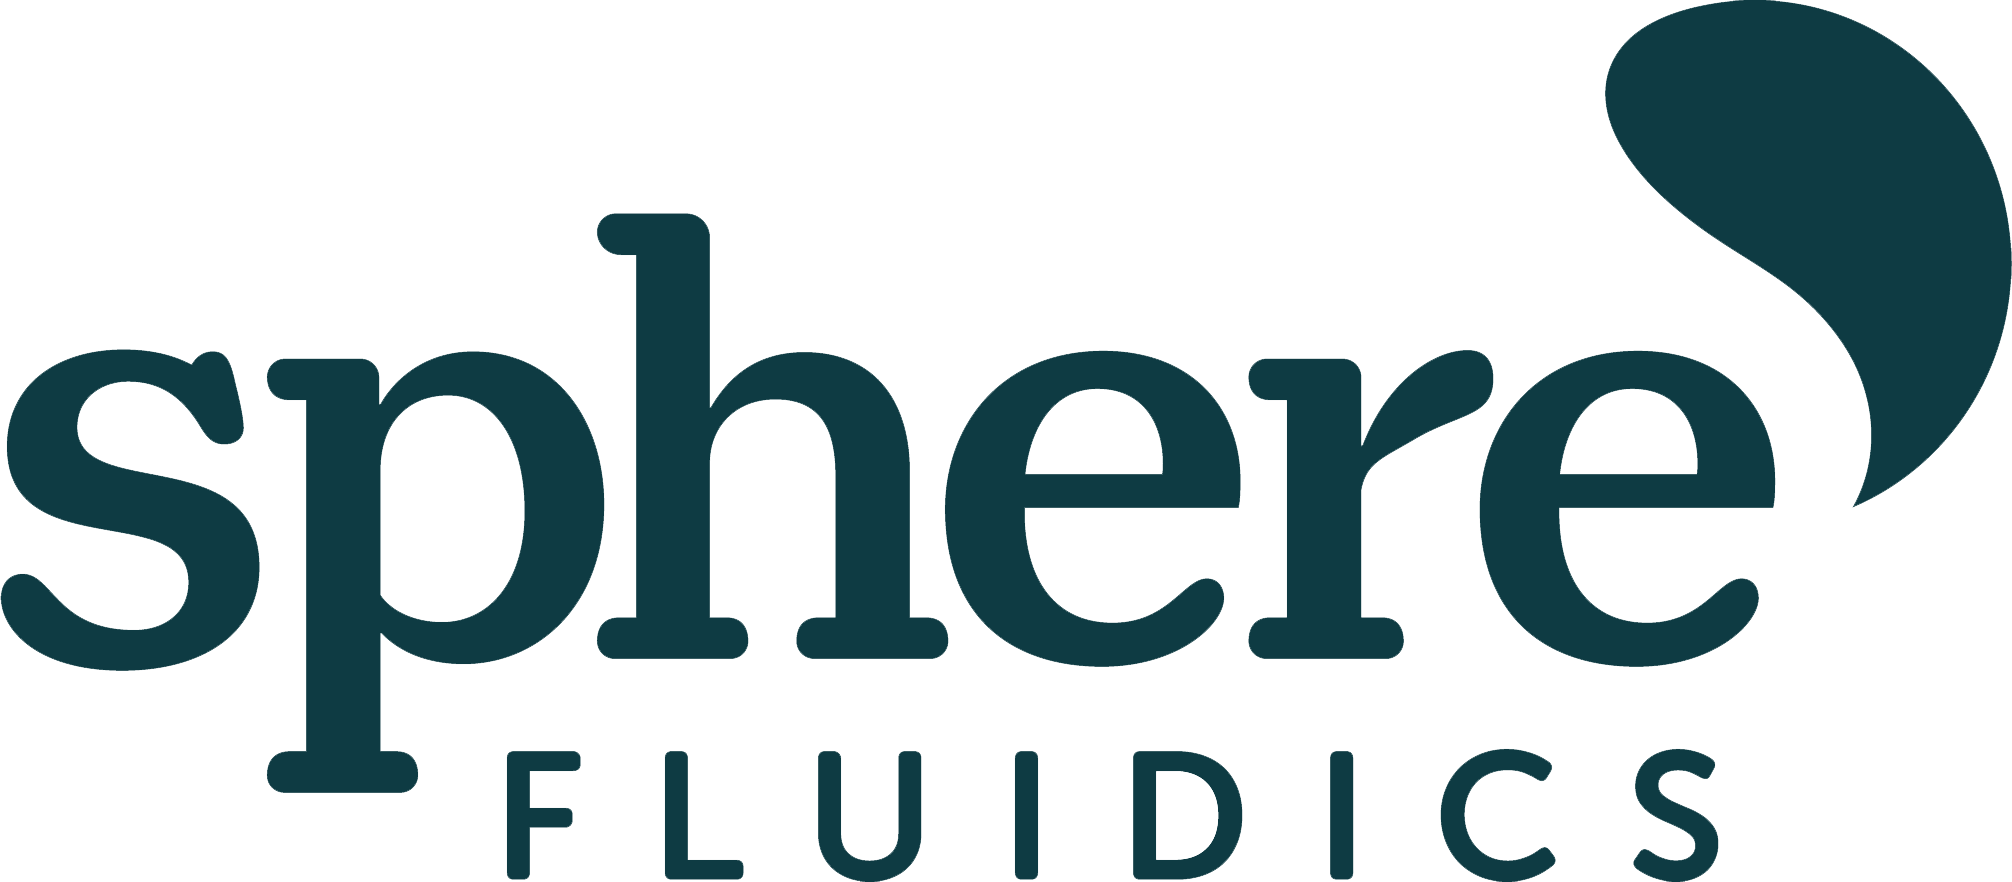 sphere fluidics logo